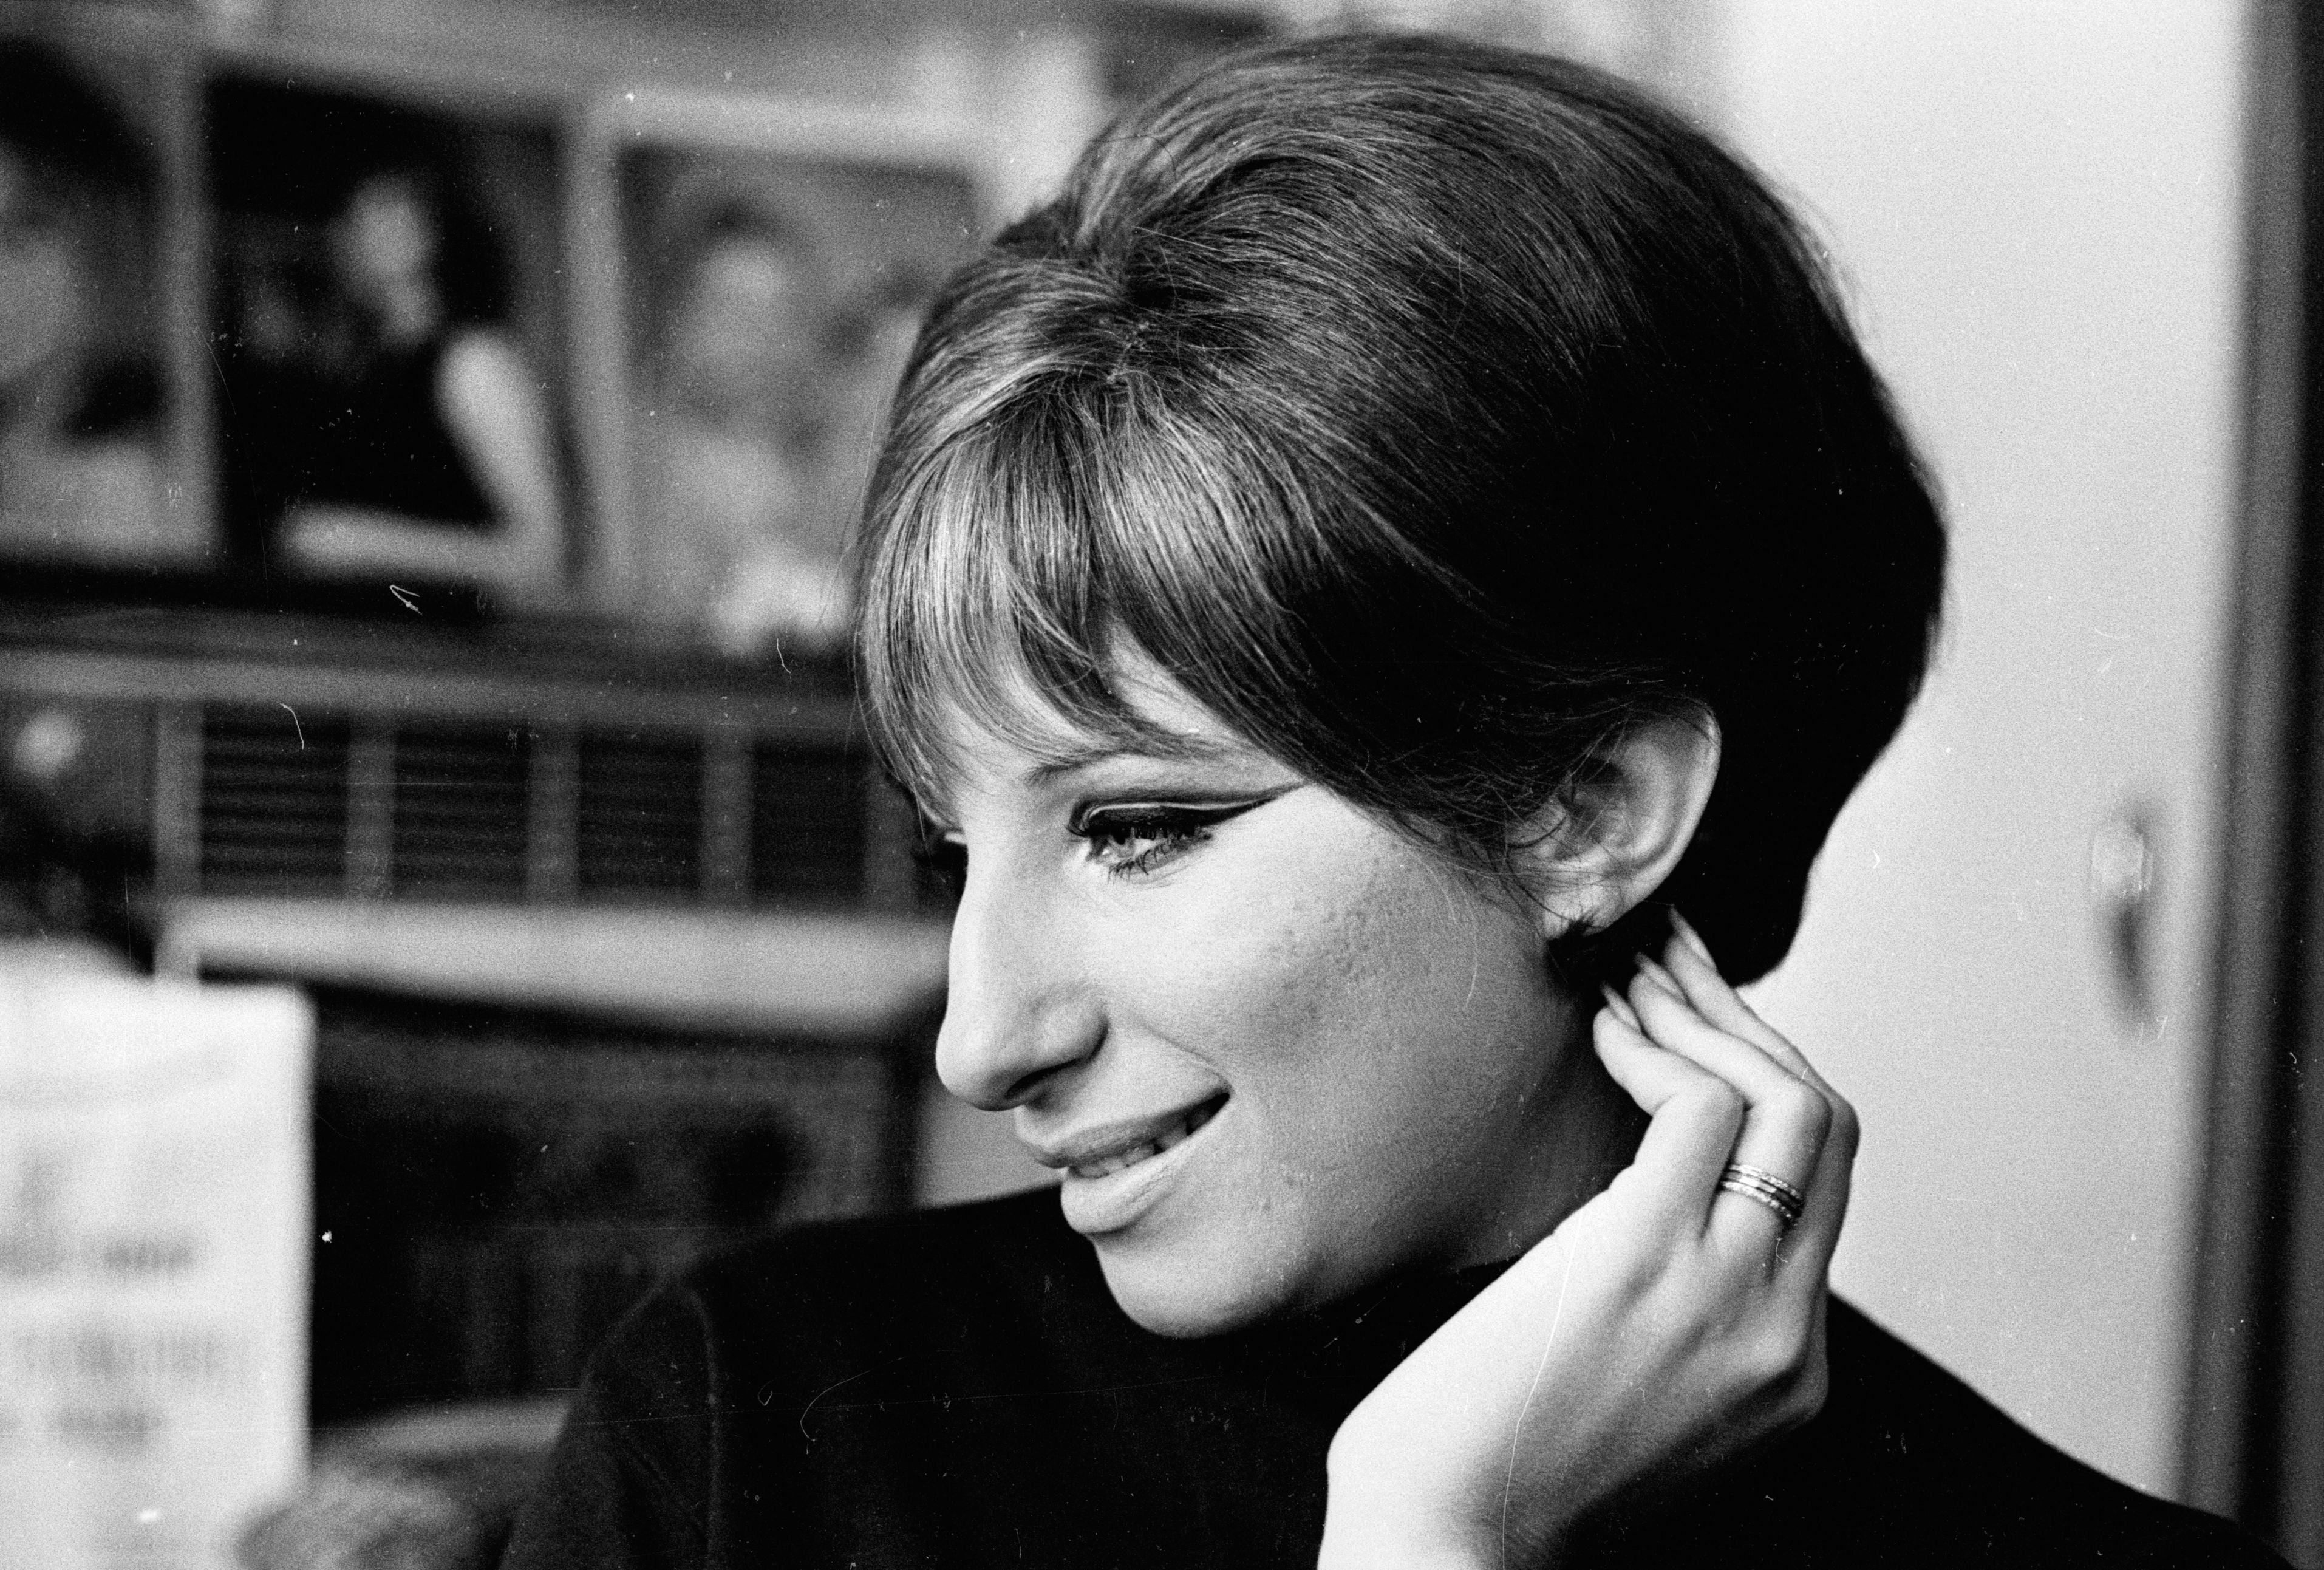 Barbra Streisand photographed in 1965